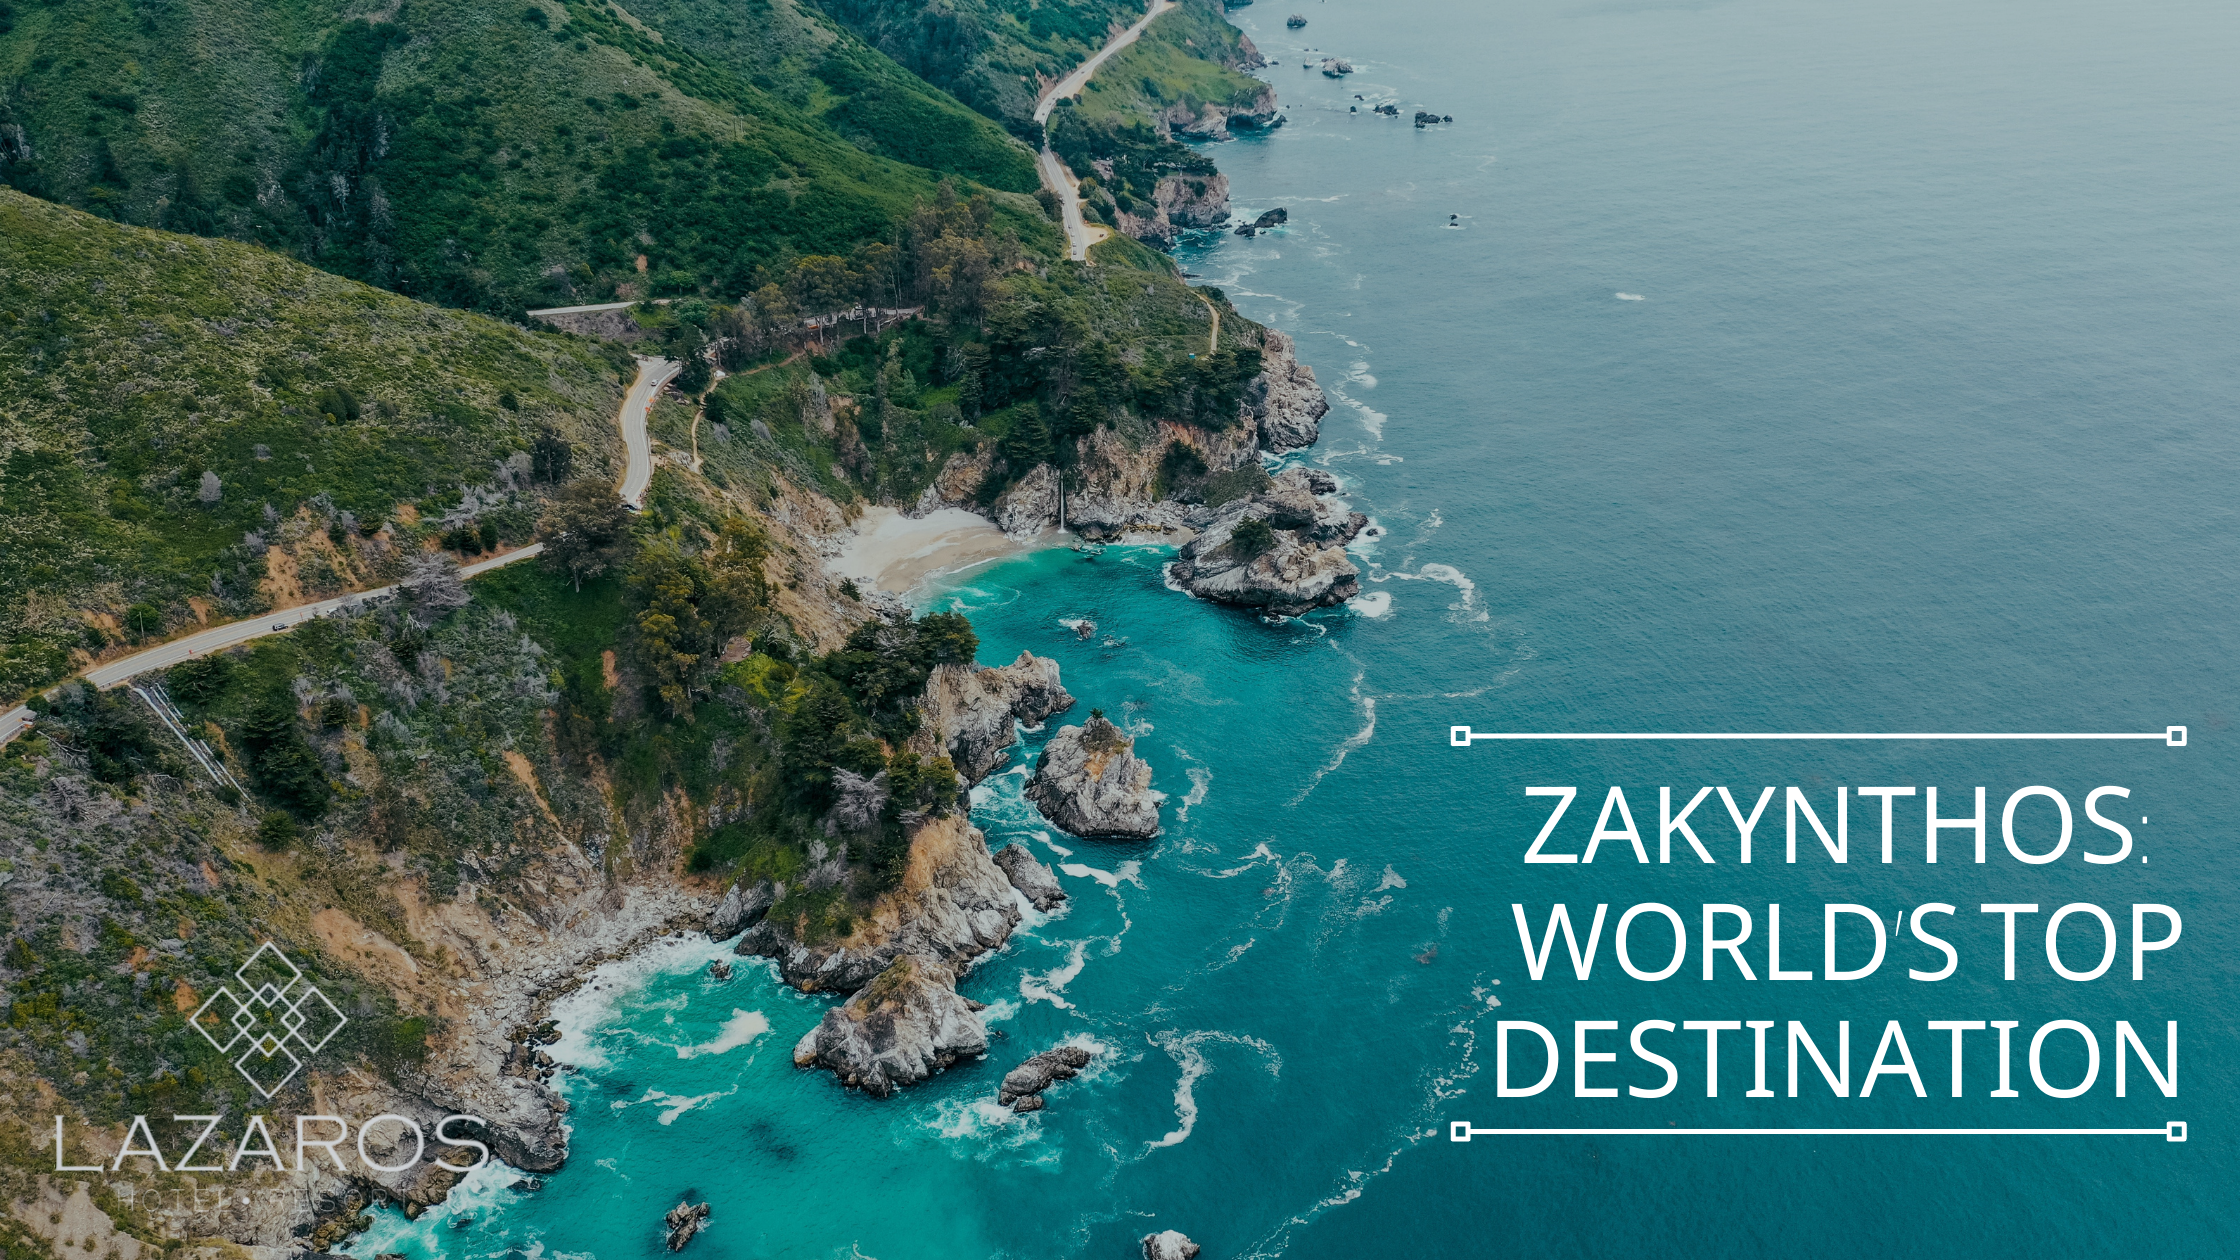 Zakynthos: World’s Top Destination